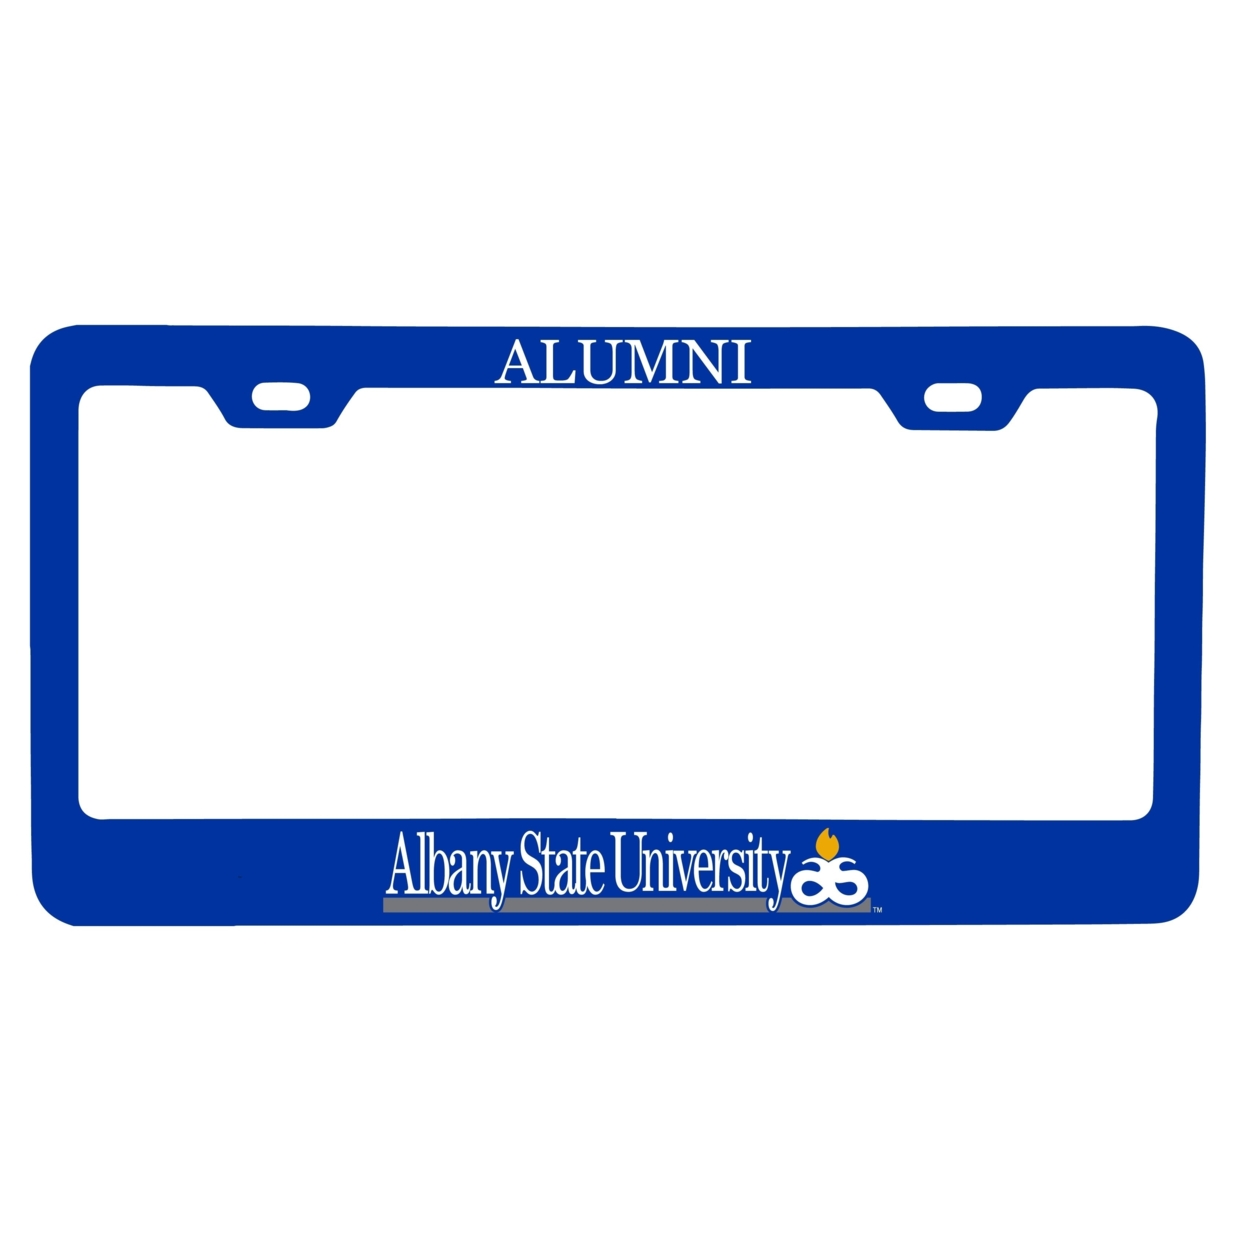 Albany State University Alumni License Plate Frame